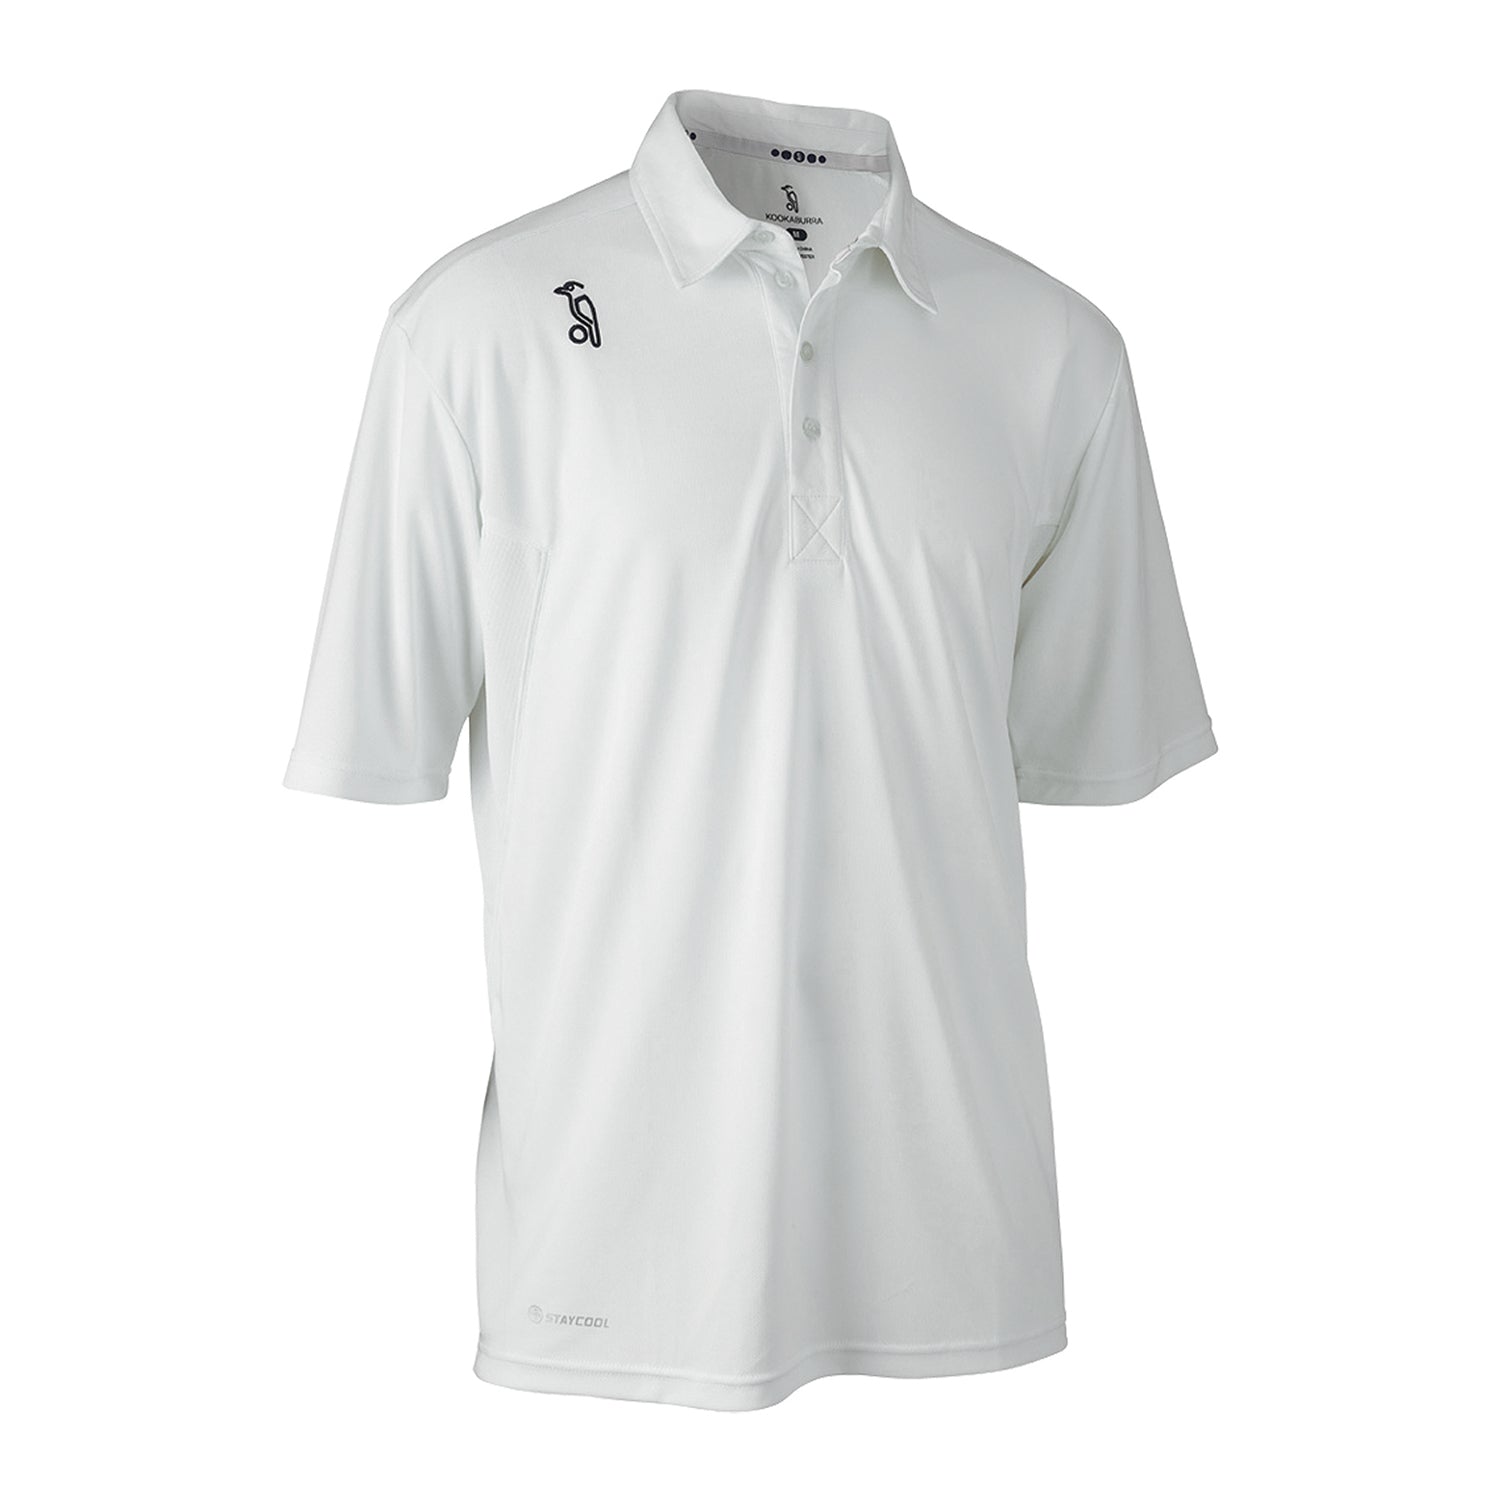 Kookaburra Pro Active Short Sleeve White Cricket Shirt